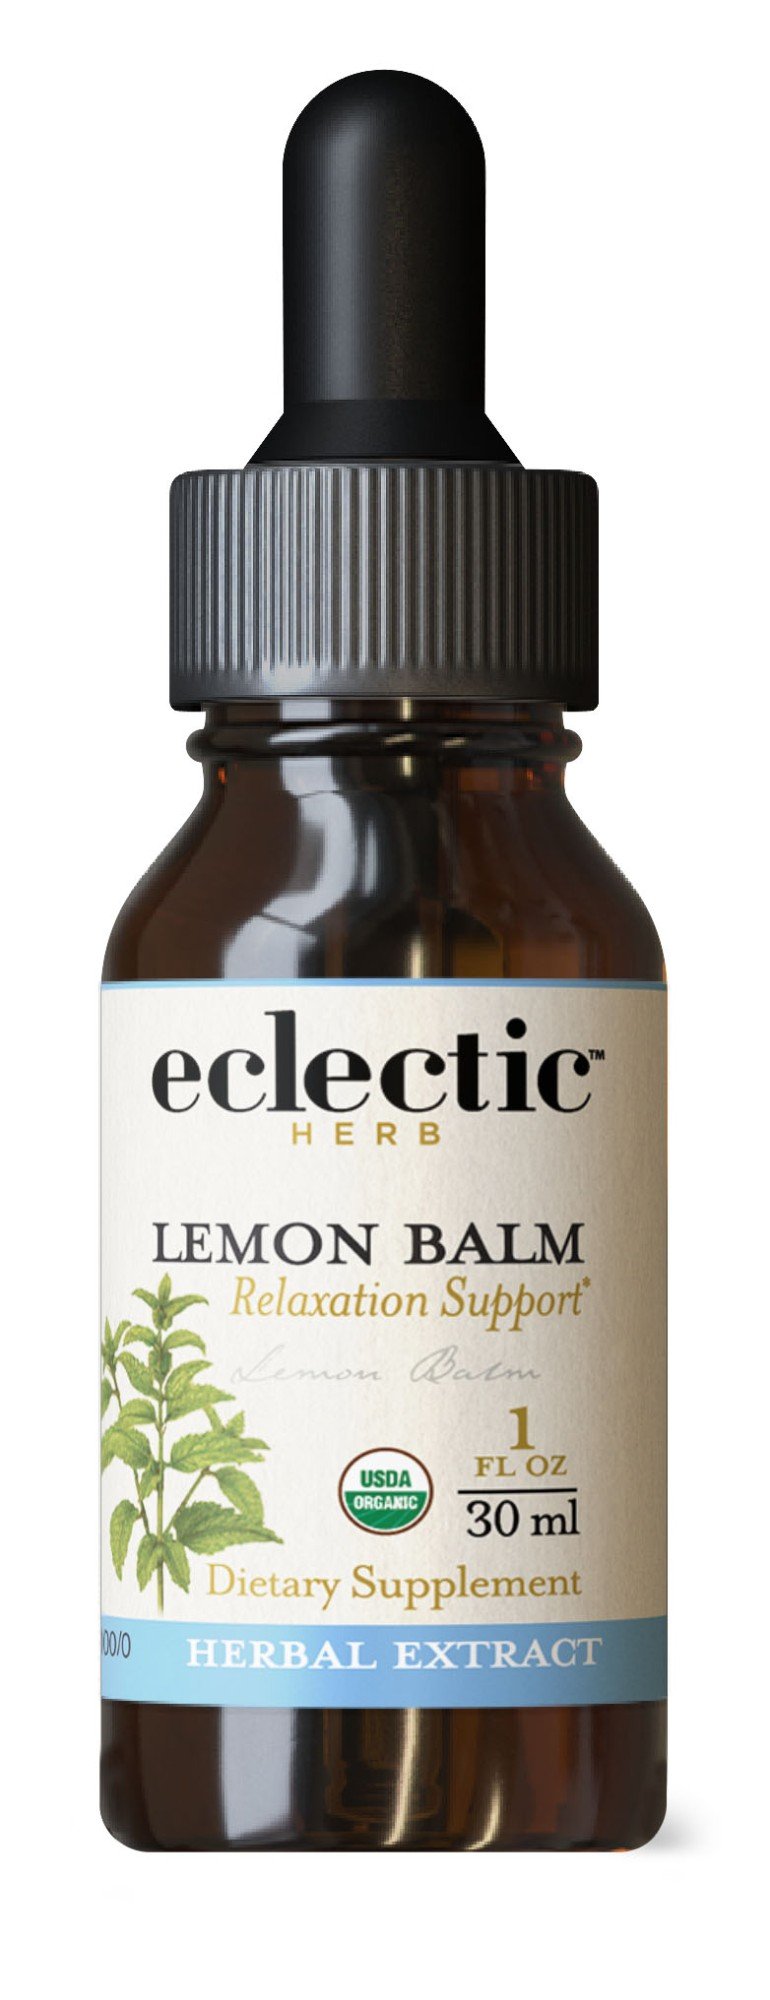 Eclectic Herb Lemon Balm Extract 1 oz Liquid